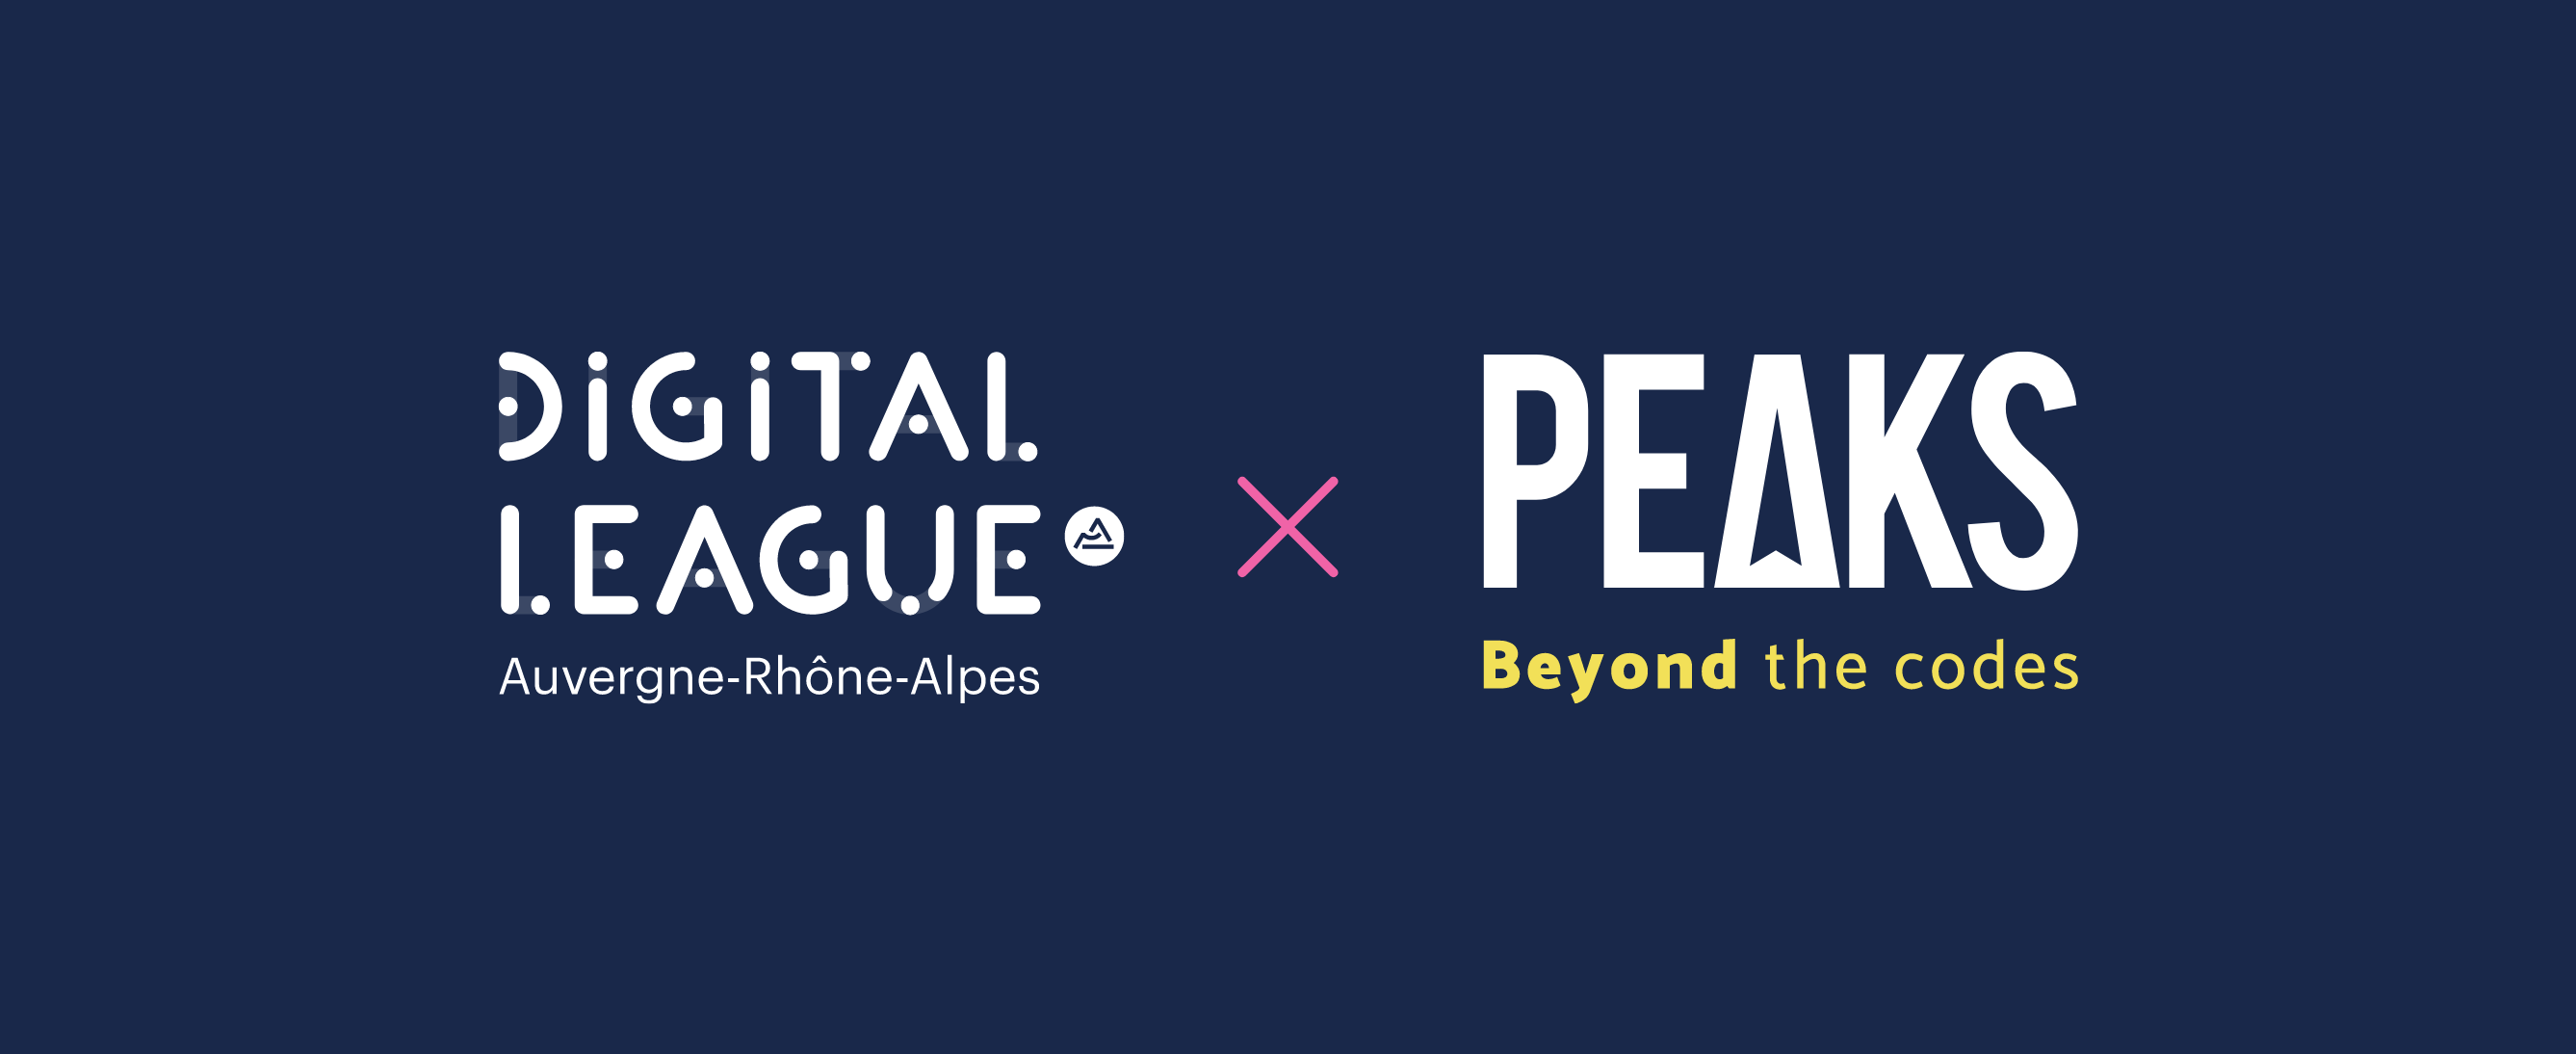 Peaks rejoint la Digital League !